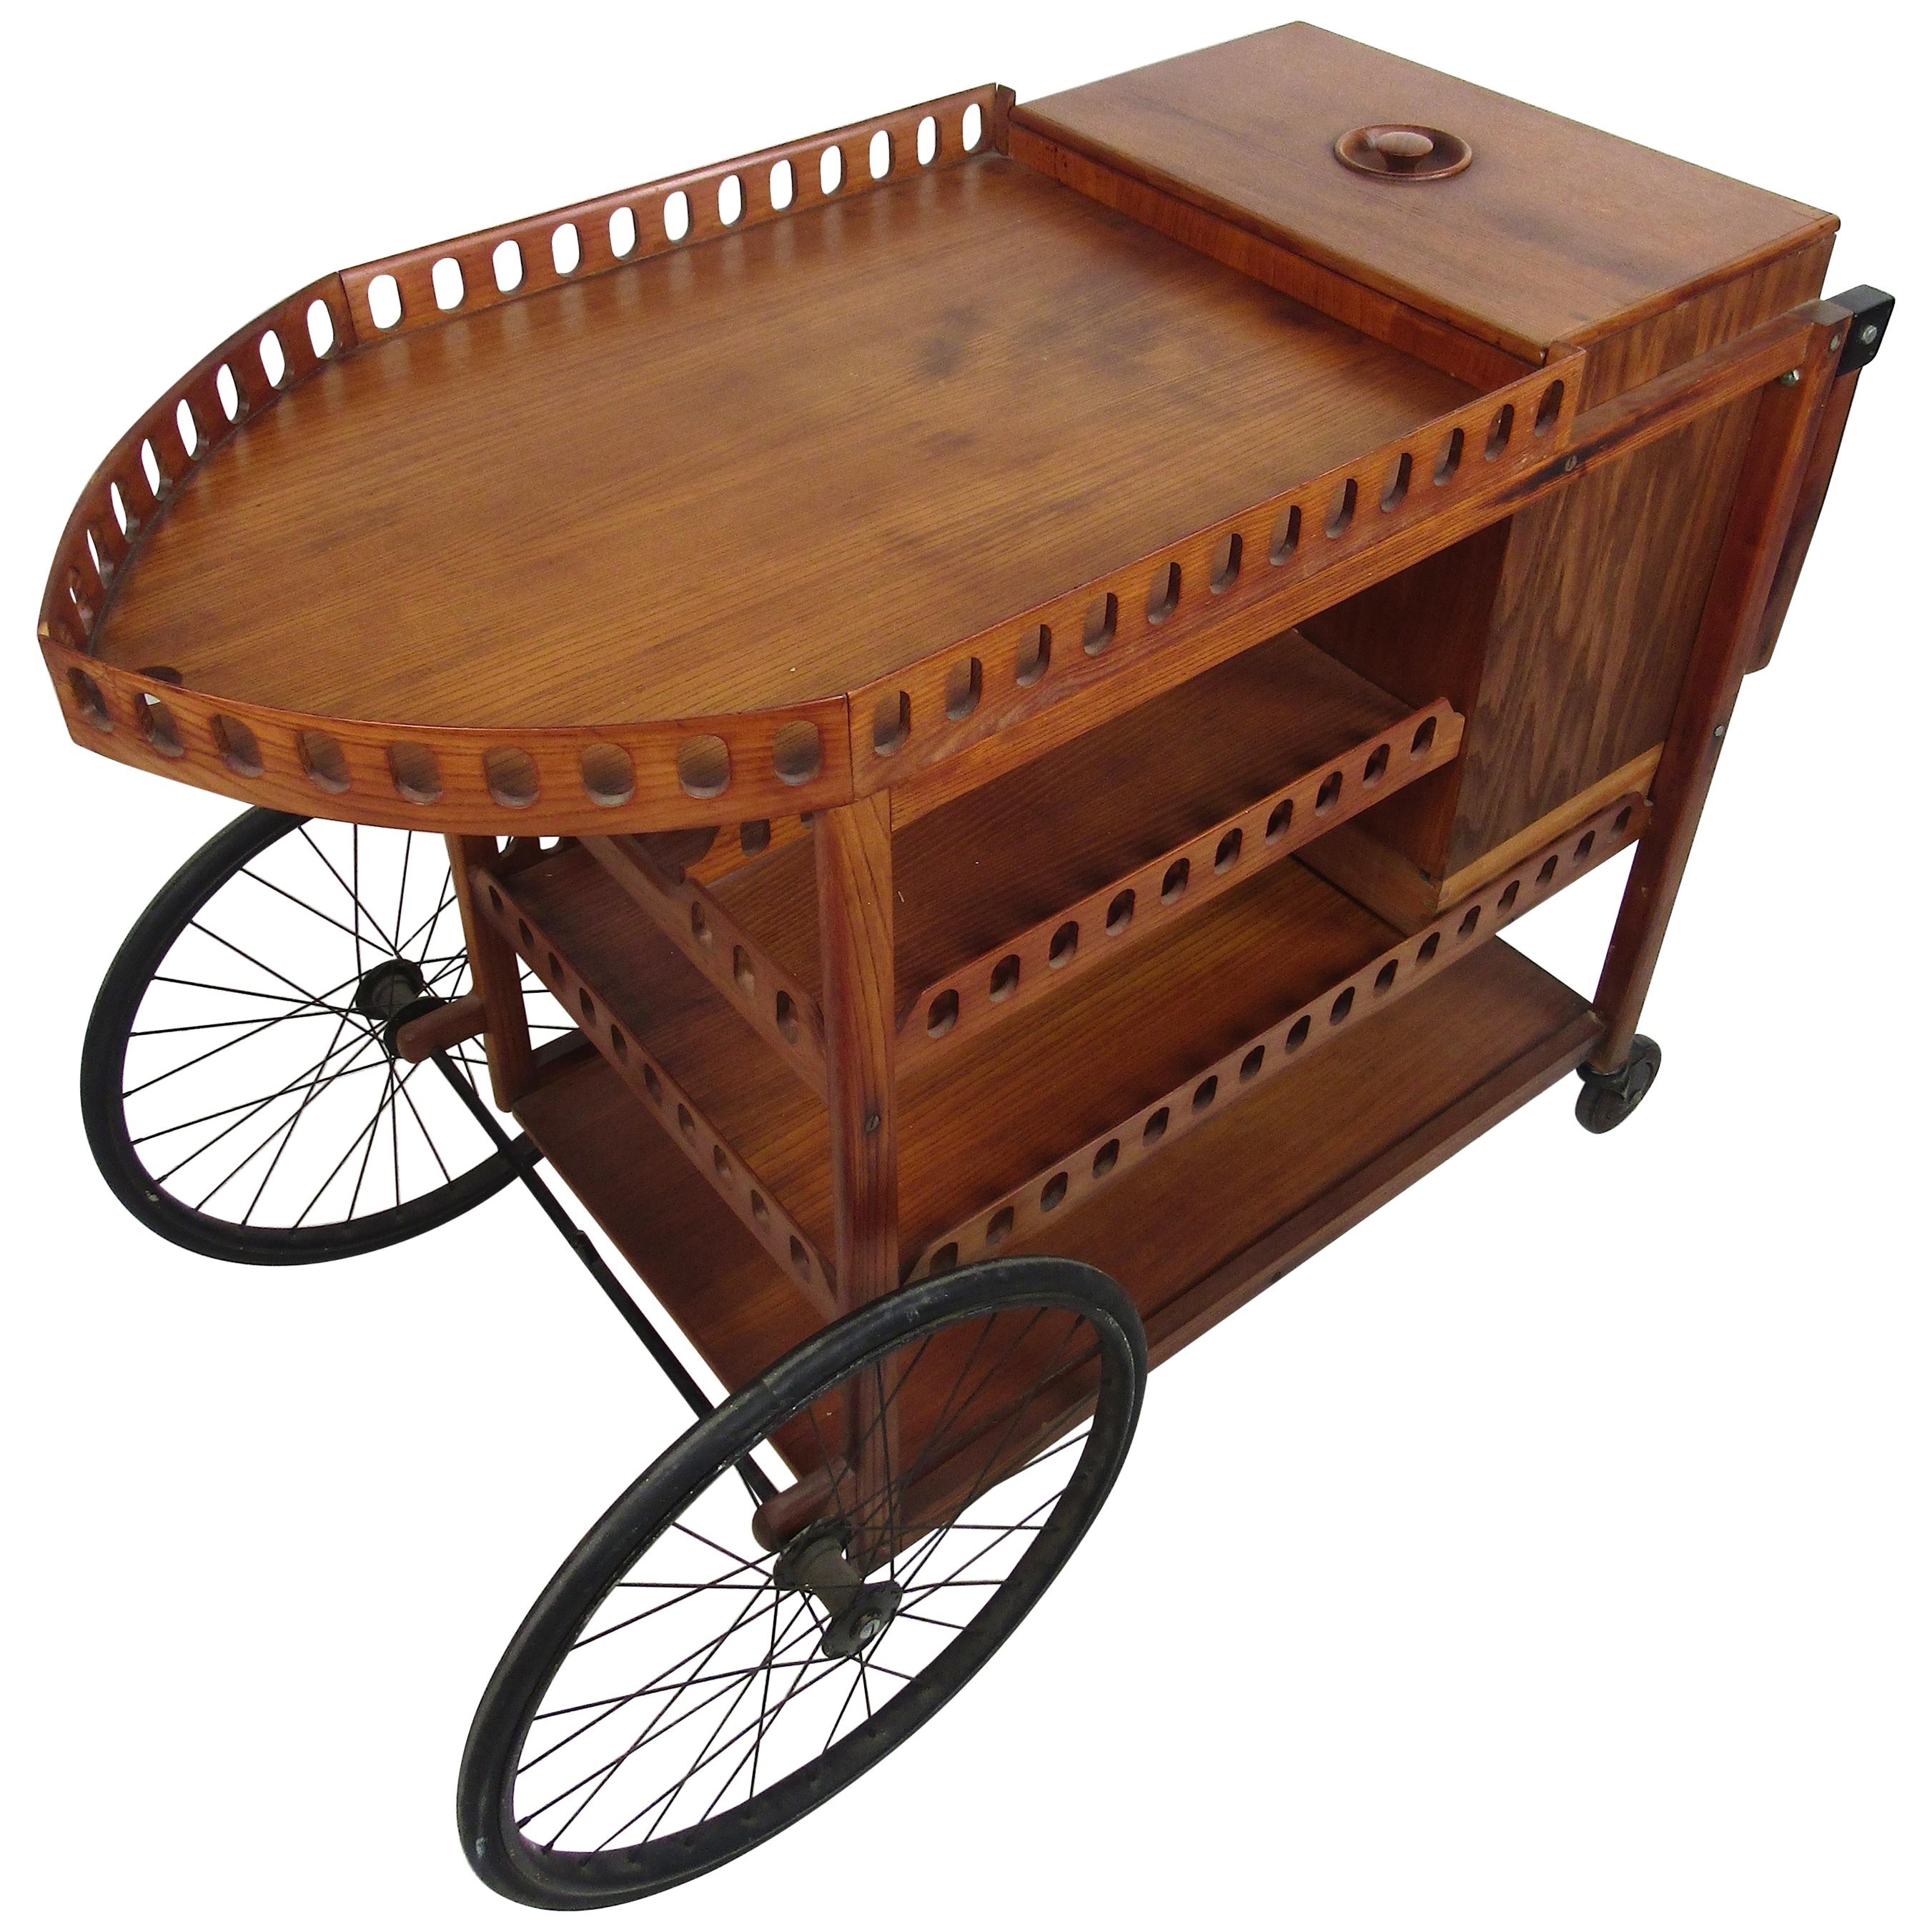 Vintage Four-Tiered Serving Cart